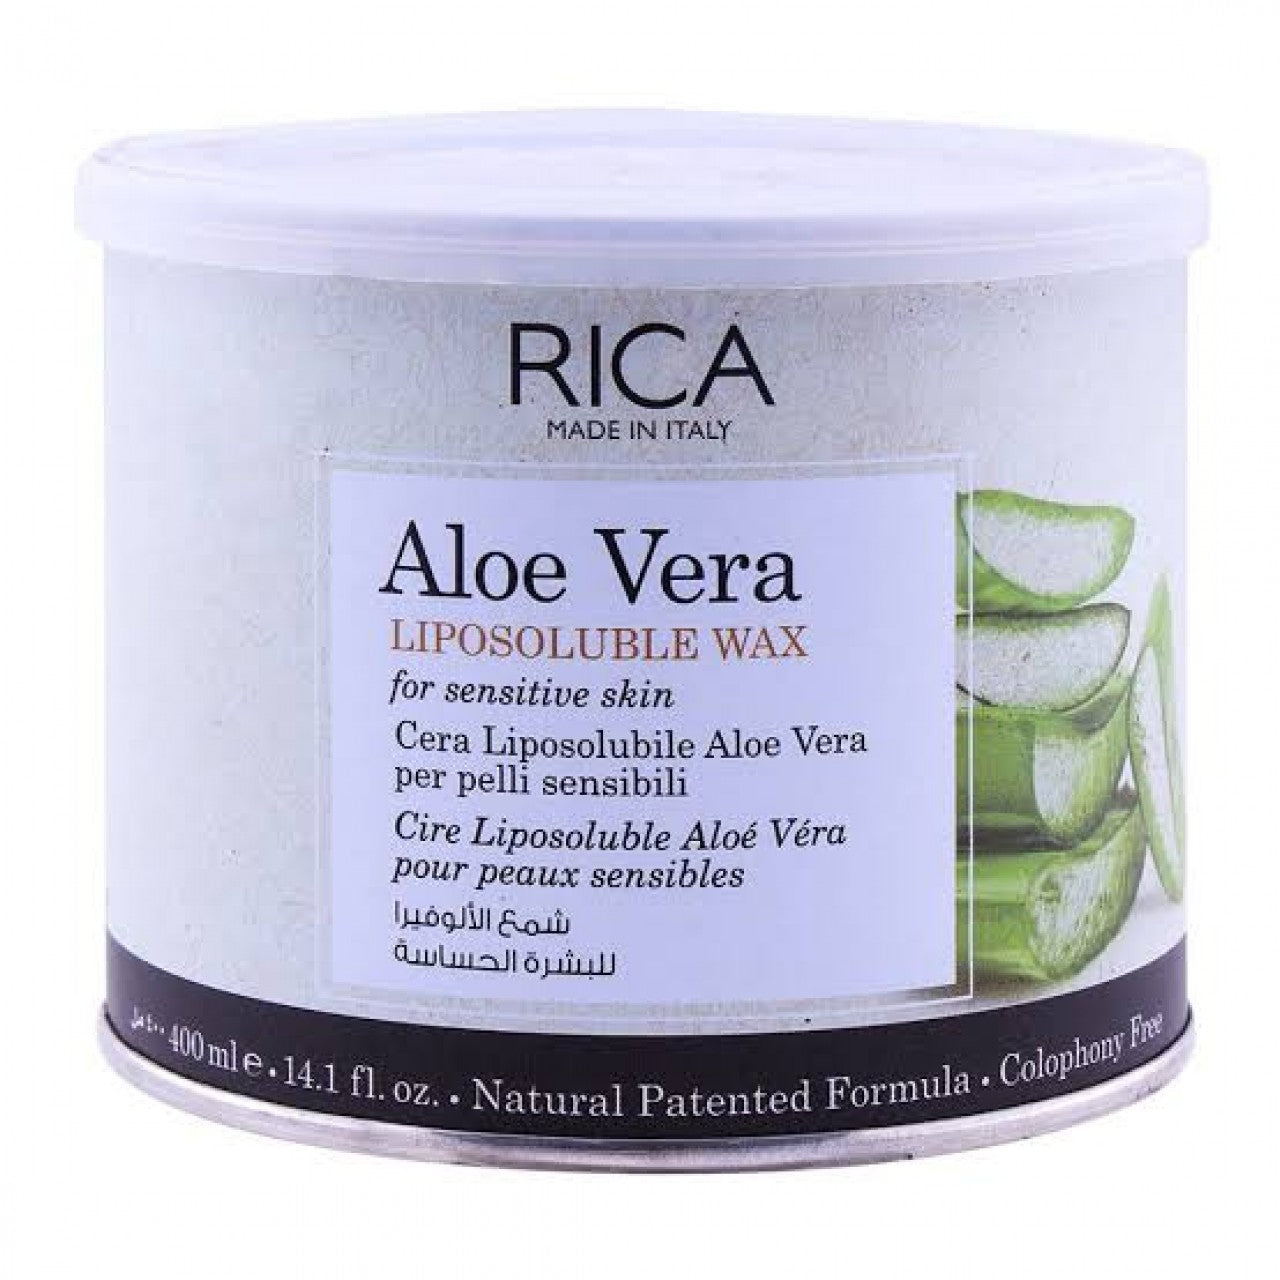 Rica Aloe Vera Liposoluble Wax for Sensitive Skin 400 mL